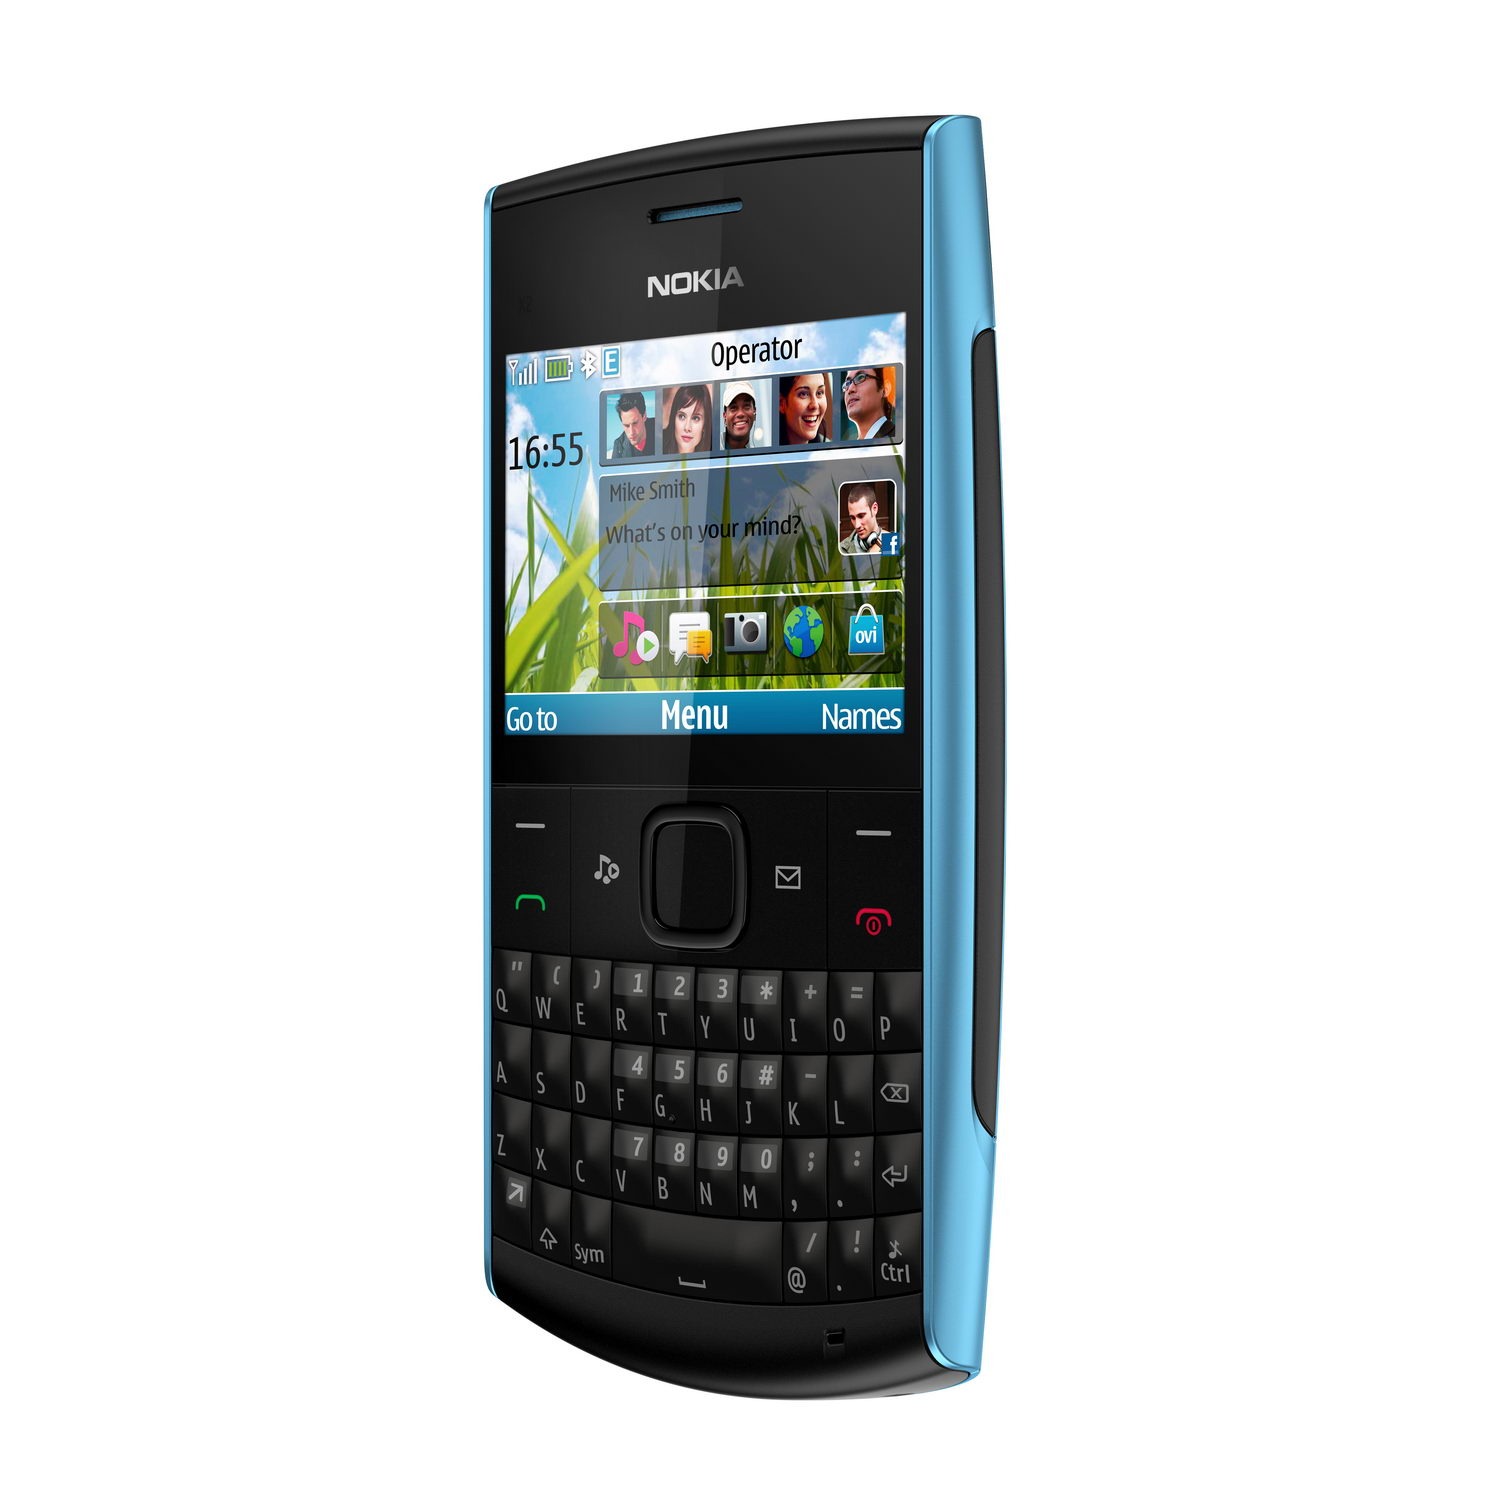 Nokia X2-01 Price in Pakistan, Specification